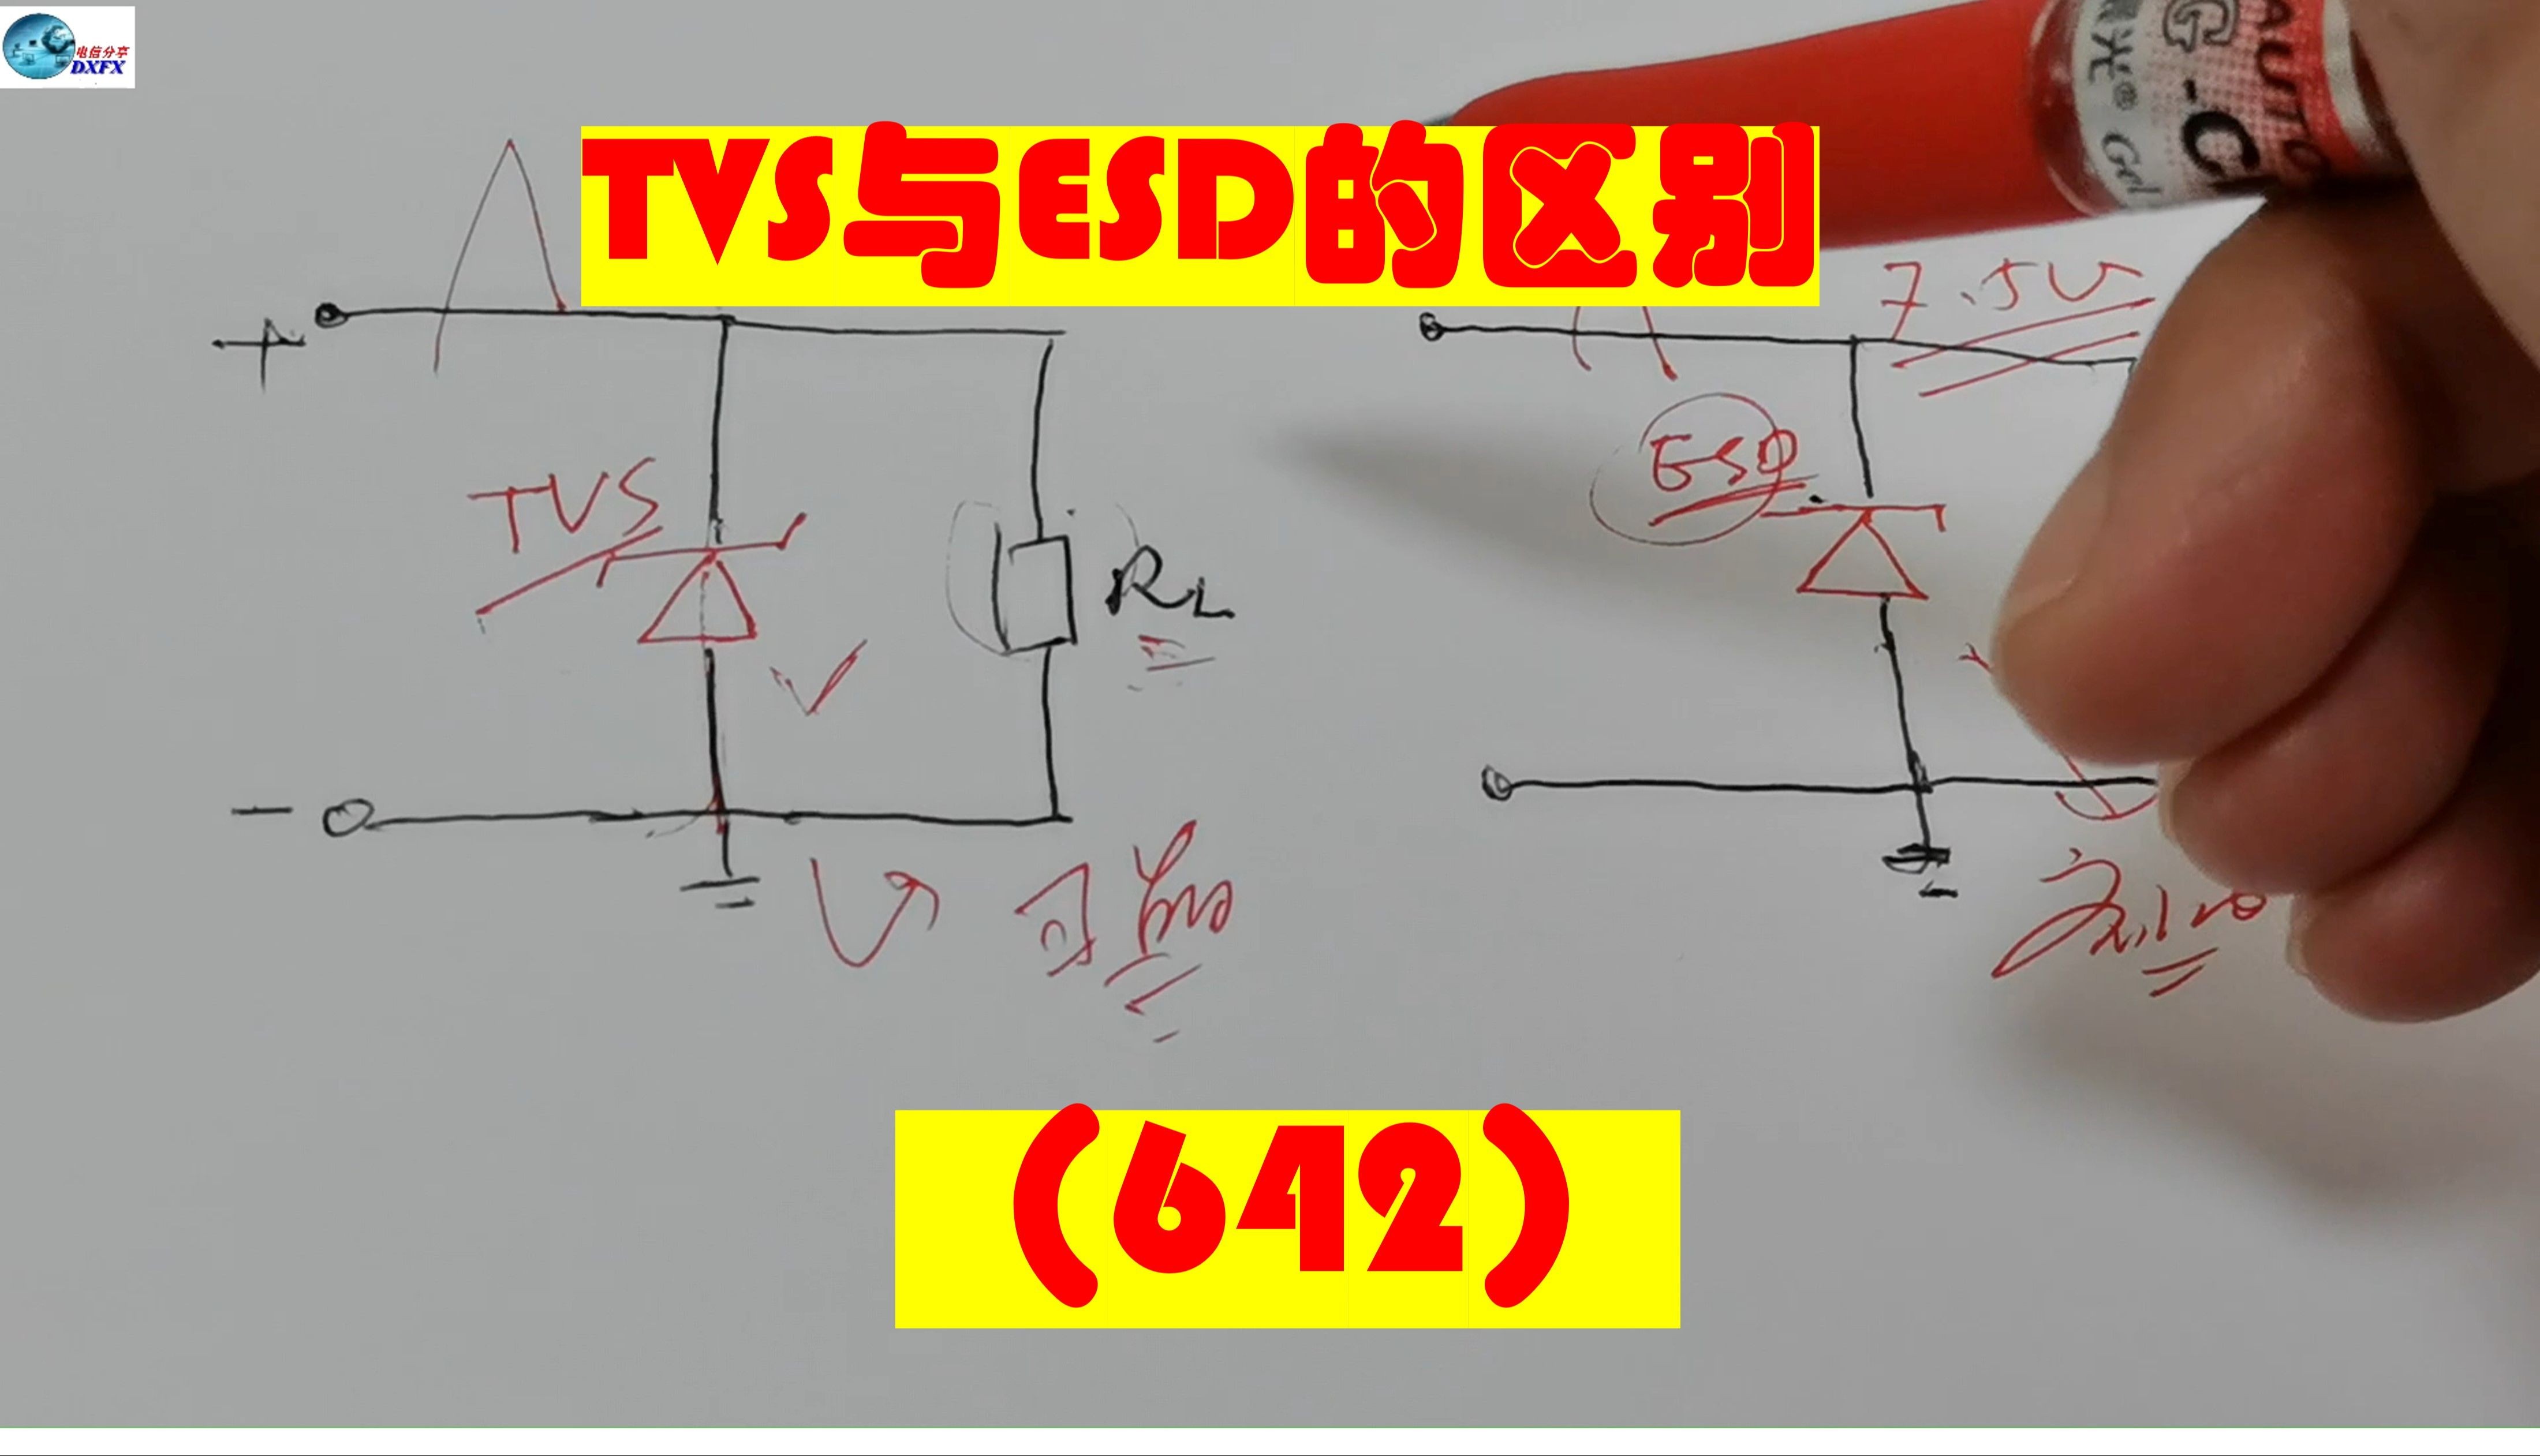 TVS与ESD的区别(642)